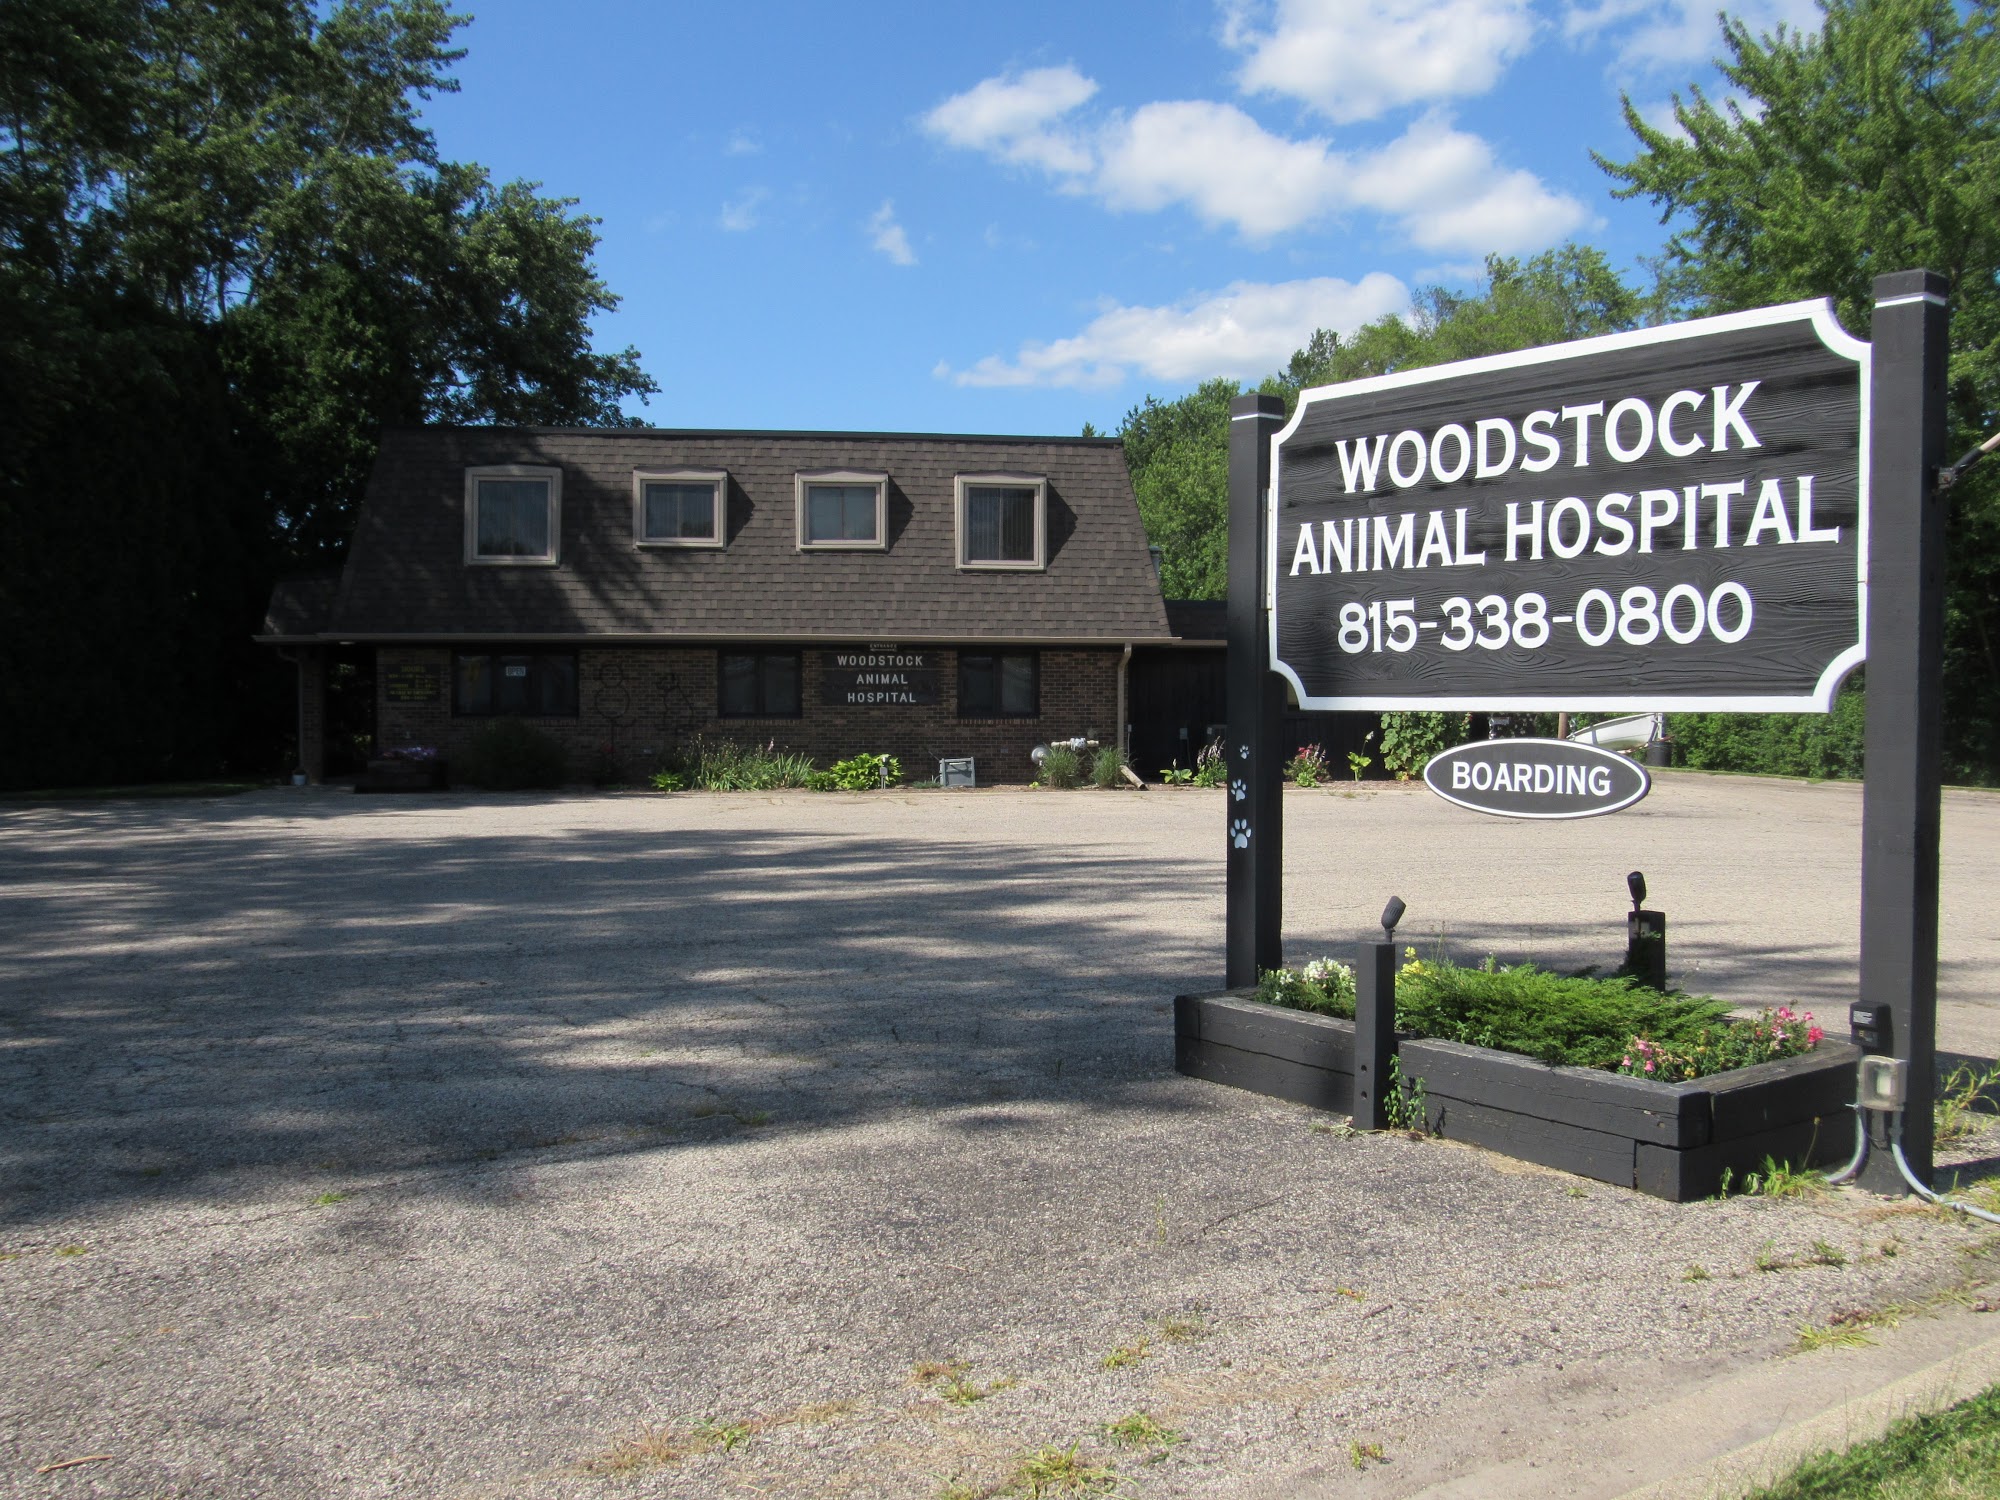 Woodstock Animal Hospital